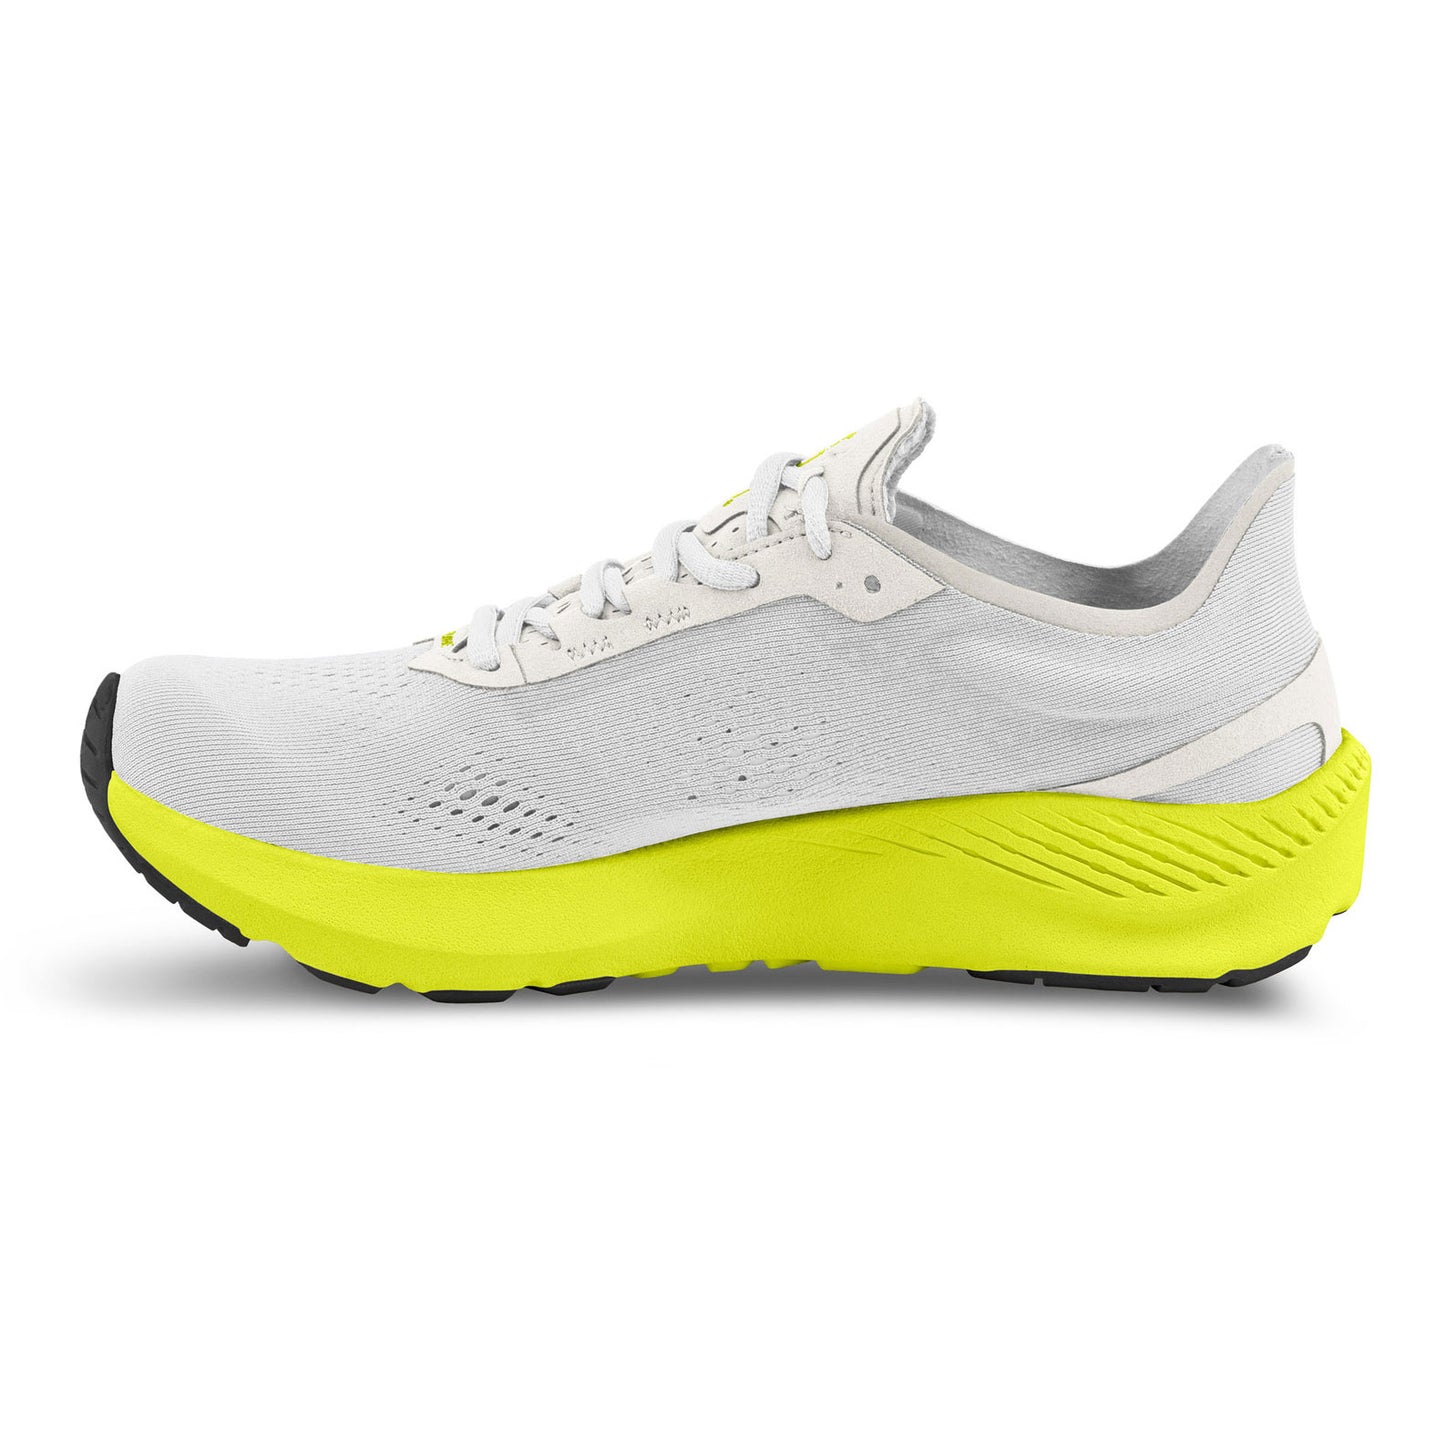 Men's Cyclone Running Shoe - White/Lime - Regular (D)